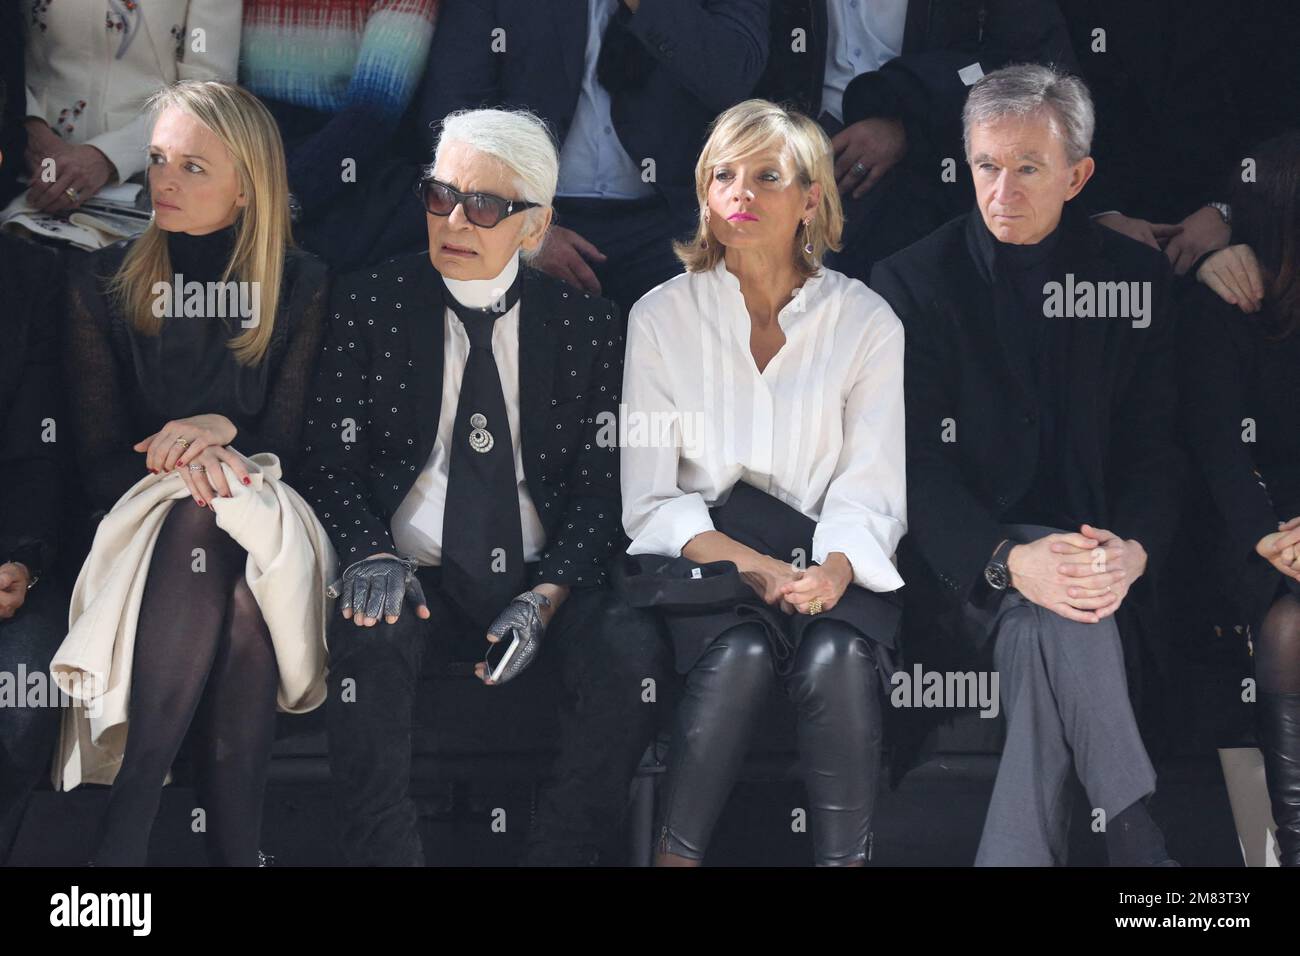 LVMH owner Bernard Arnault appoints daughter as head of Dior